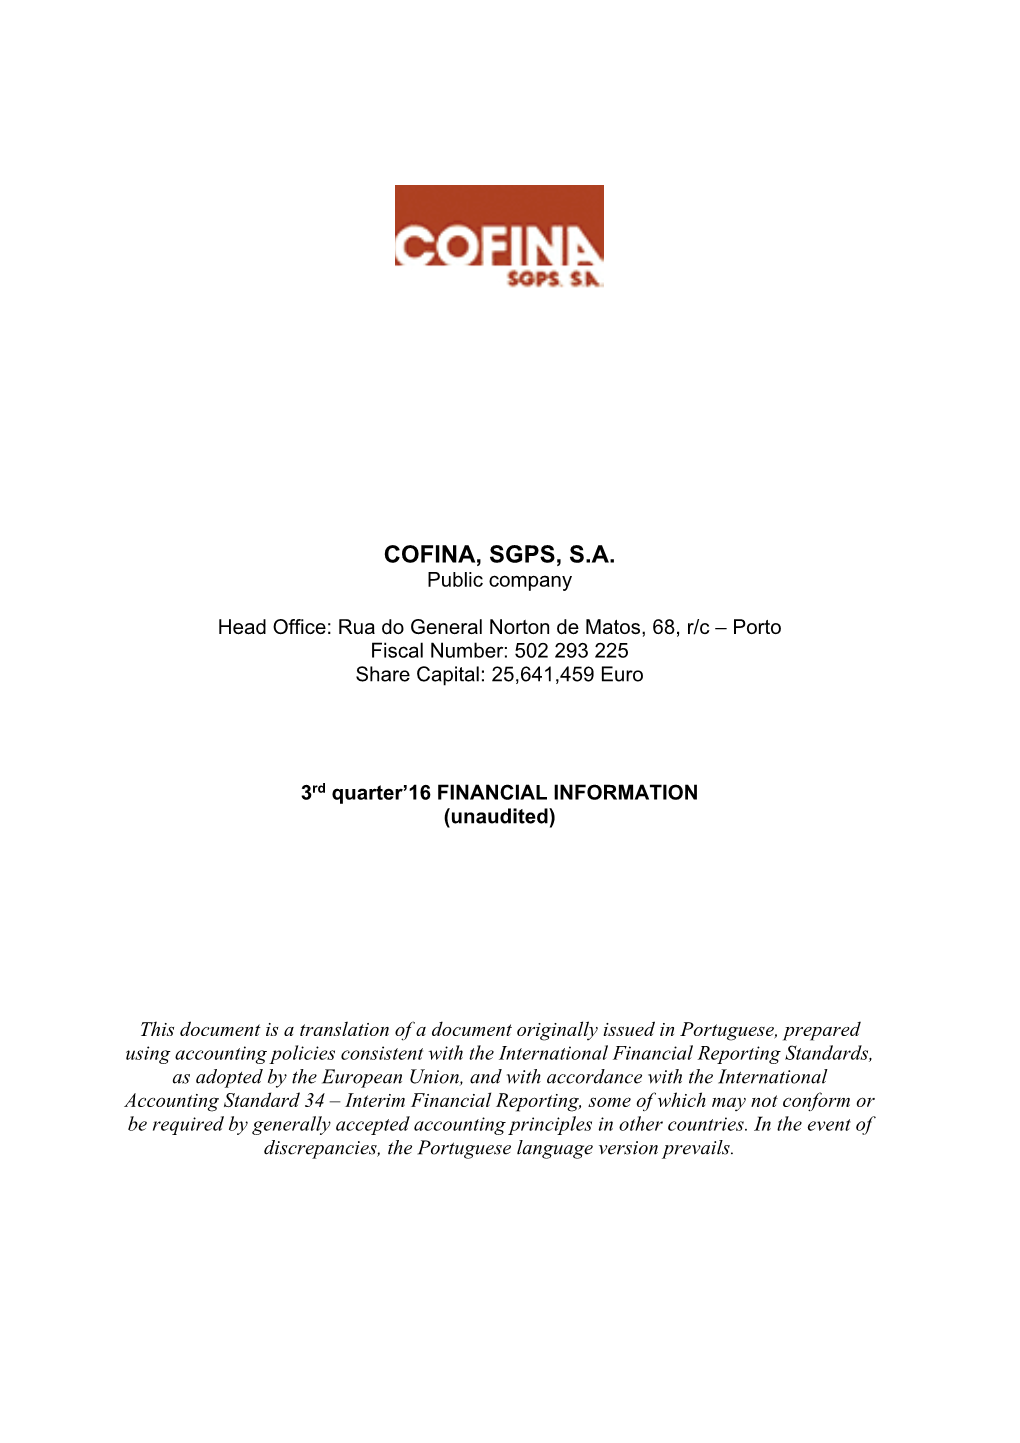 COFINA, SGPS, S.A. Public Company